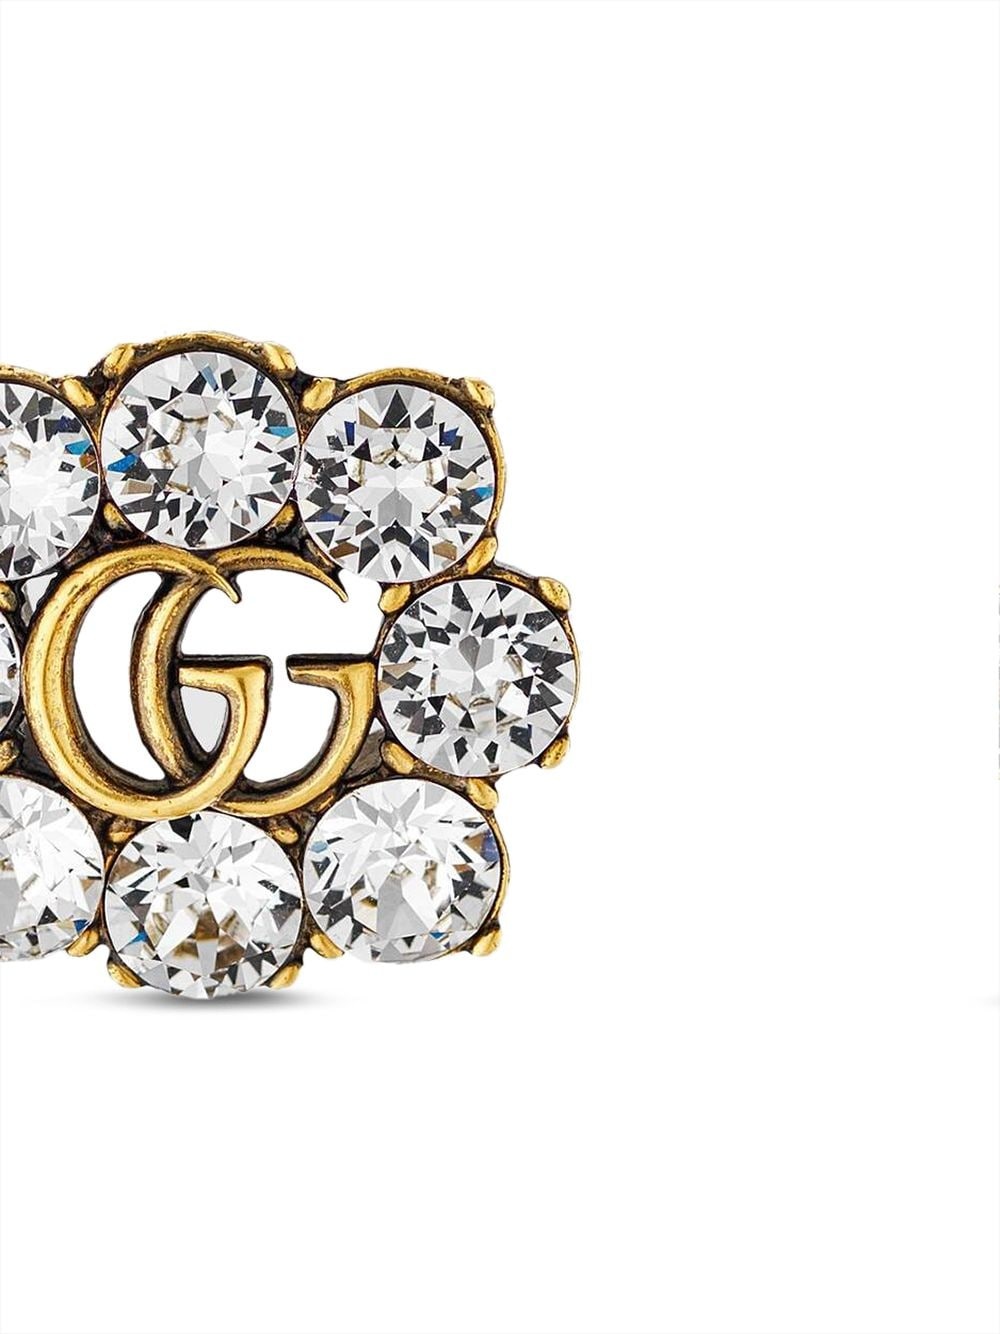 Double G crystal earrings - 3